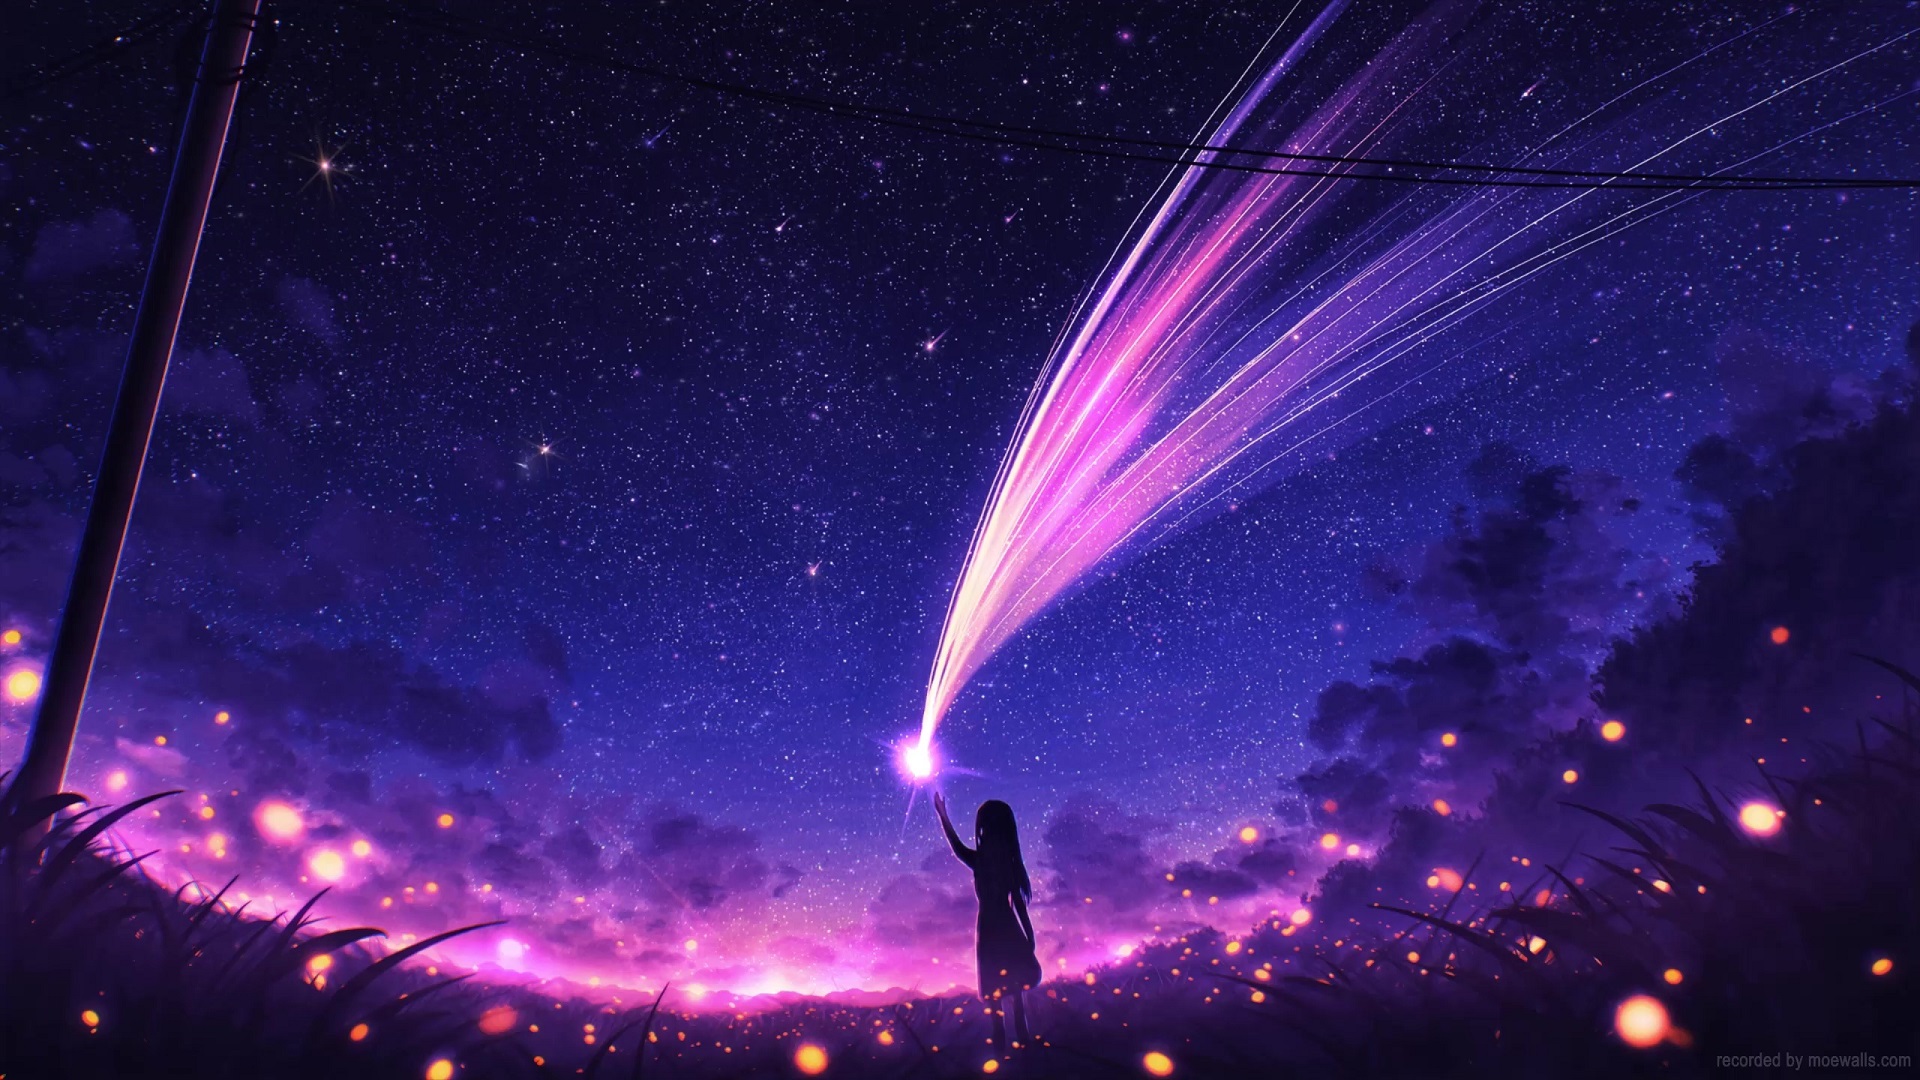 HD desktop wallpaper Anime Starry Sky Original Shooting Star download  free picture 909805